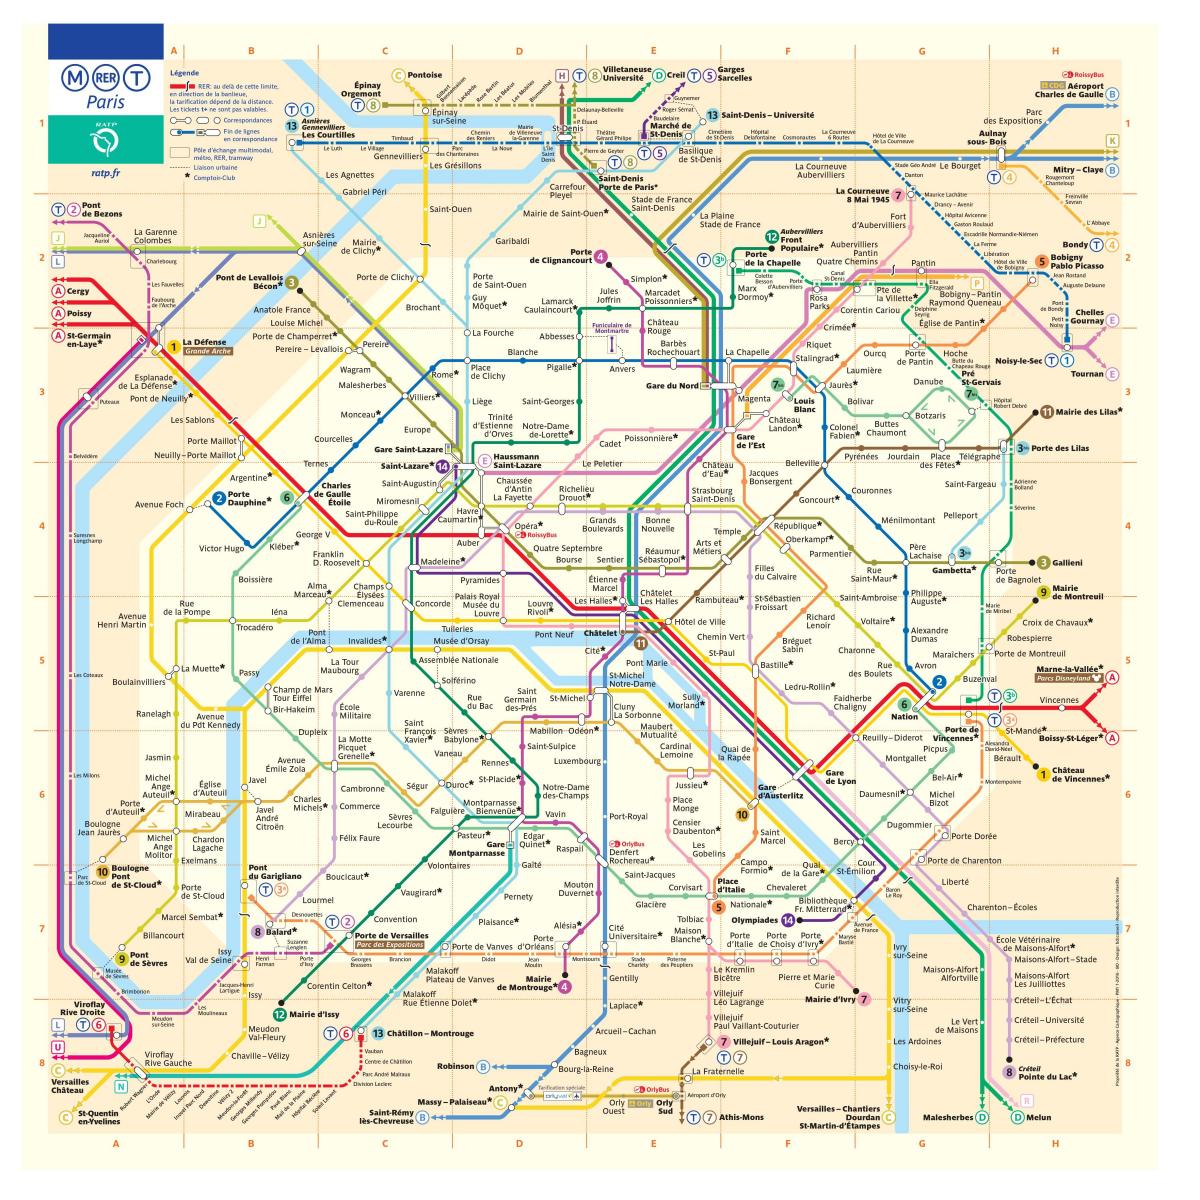 Kart over metro i Paris